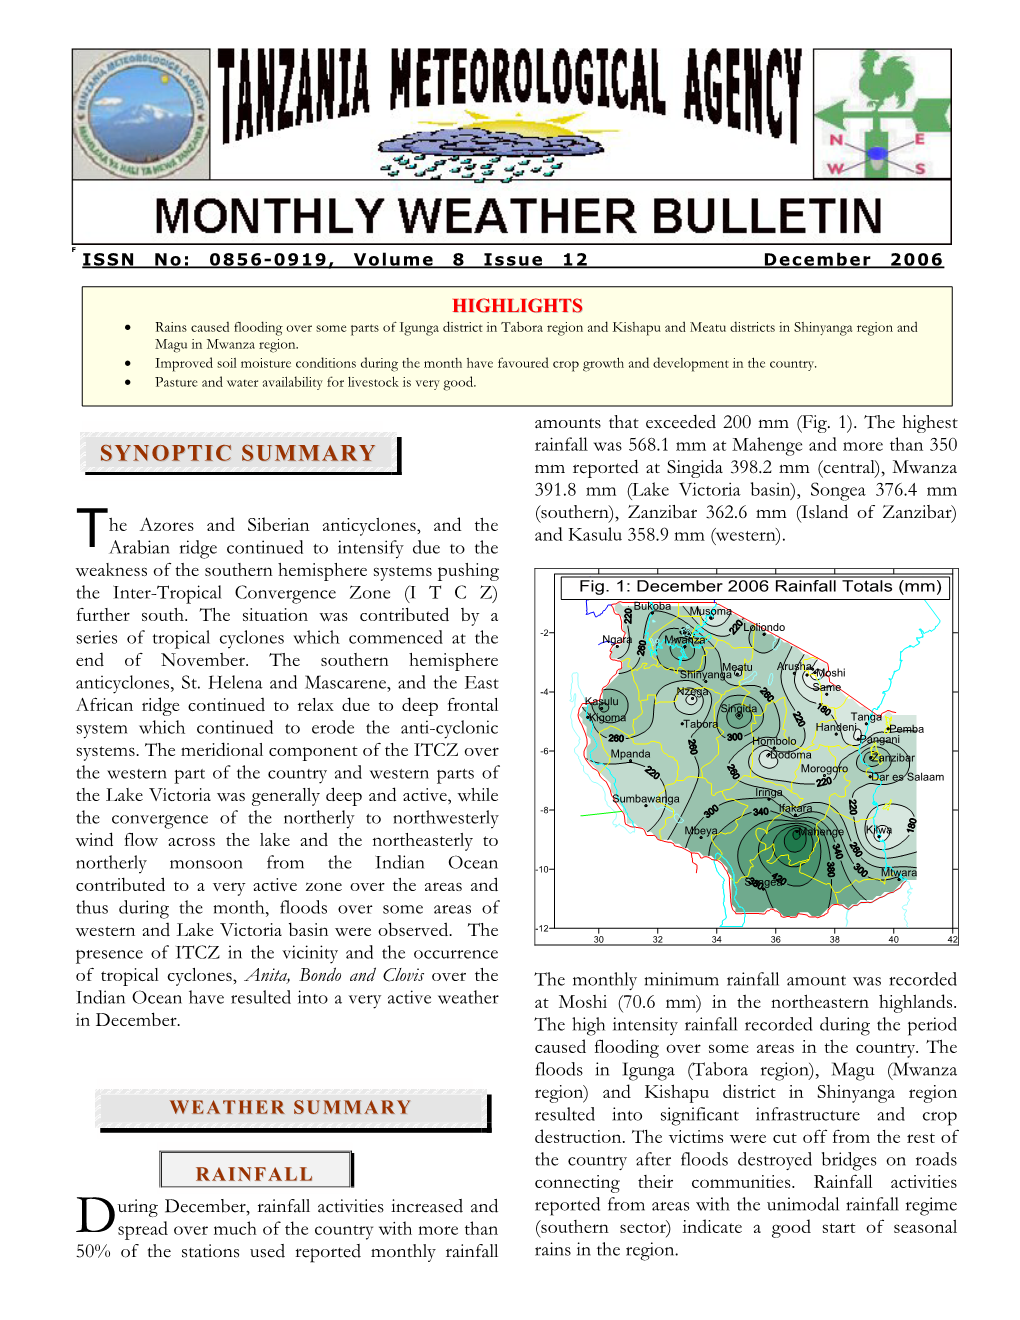 SYNOPTIC SUMMARY Rainfall Was 568.1 Mm at Mahenge and More Than 350 Mm Reported at Singida 398.2 Mm (Central), Mwanza